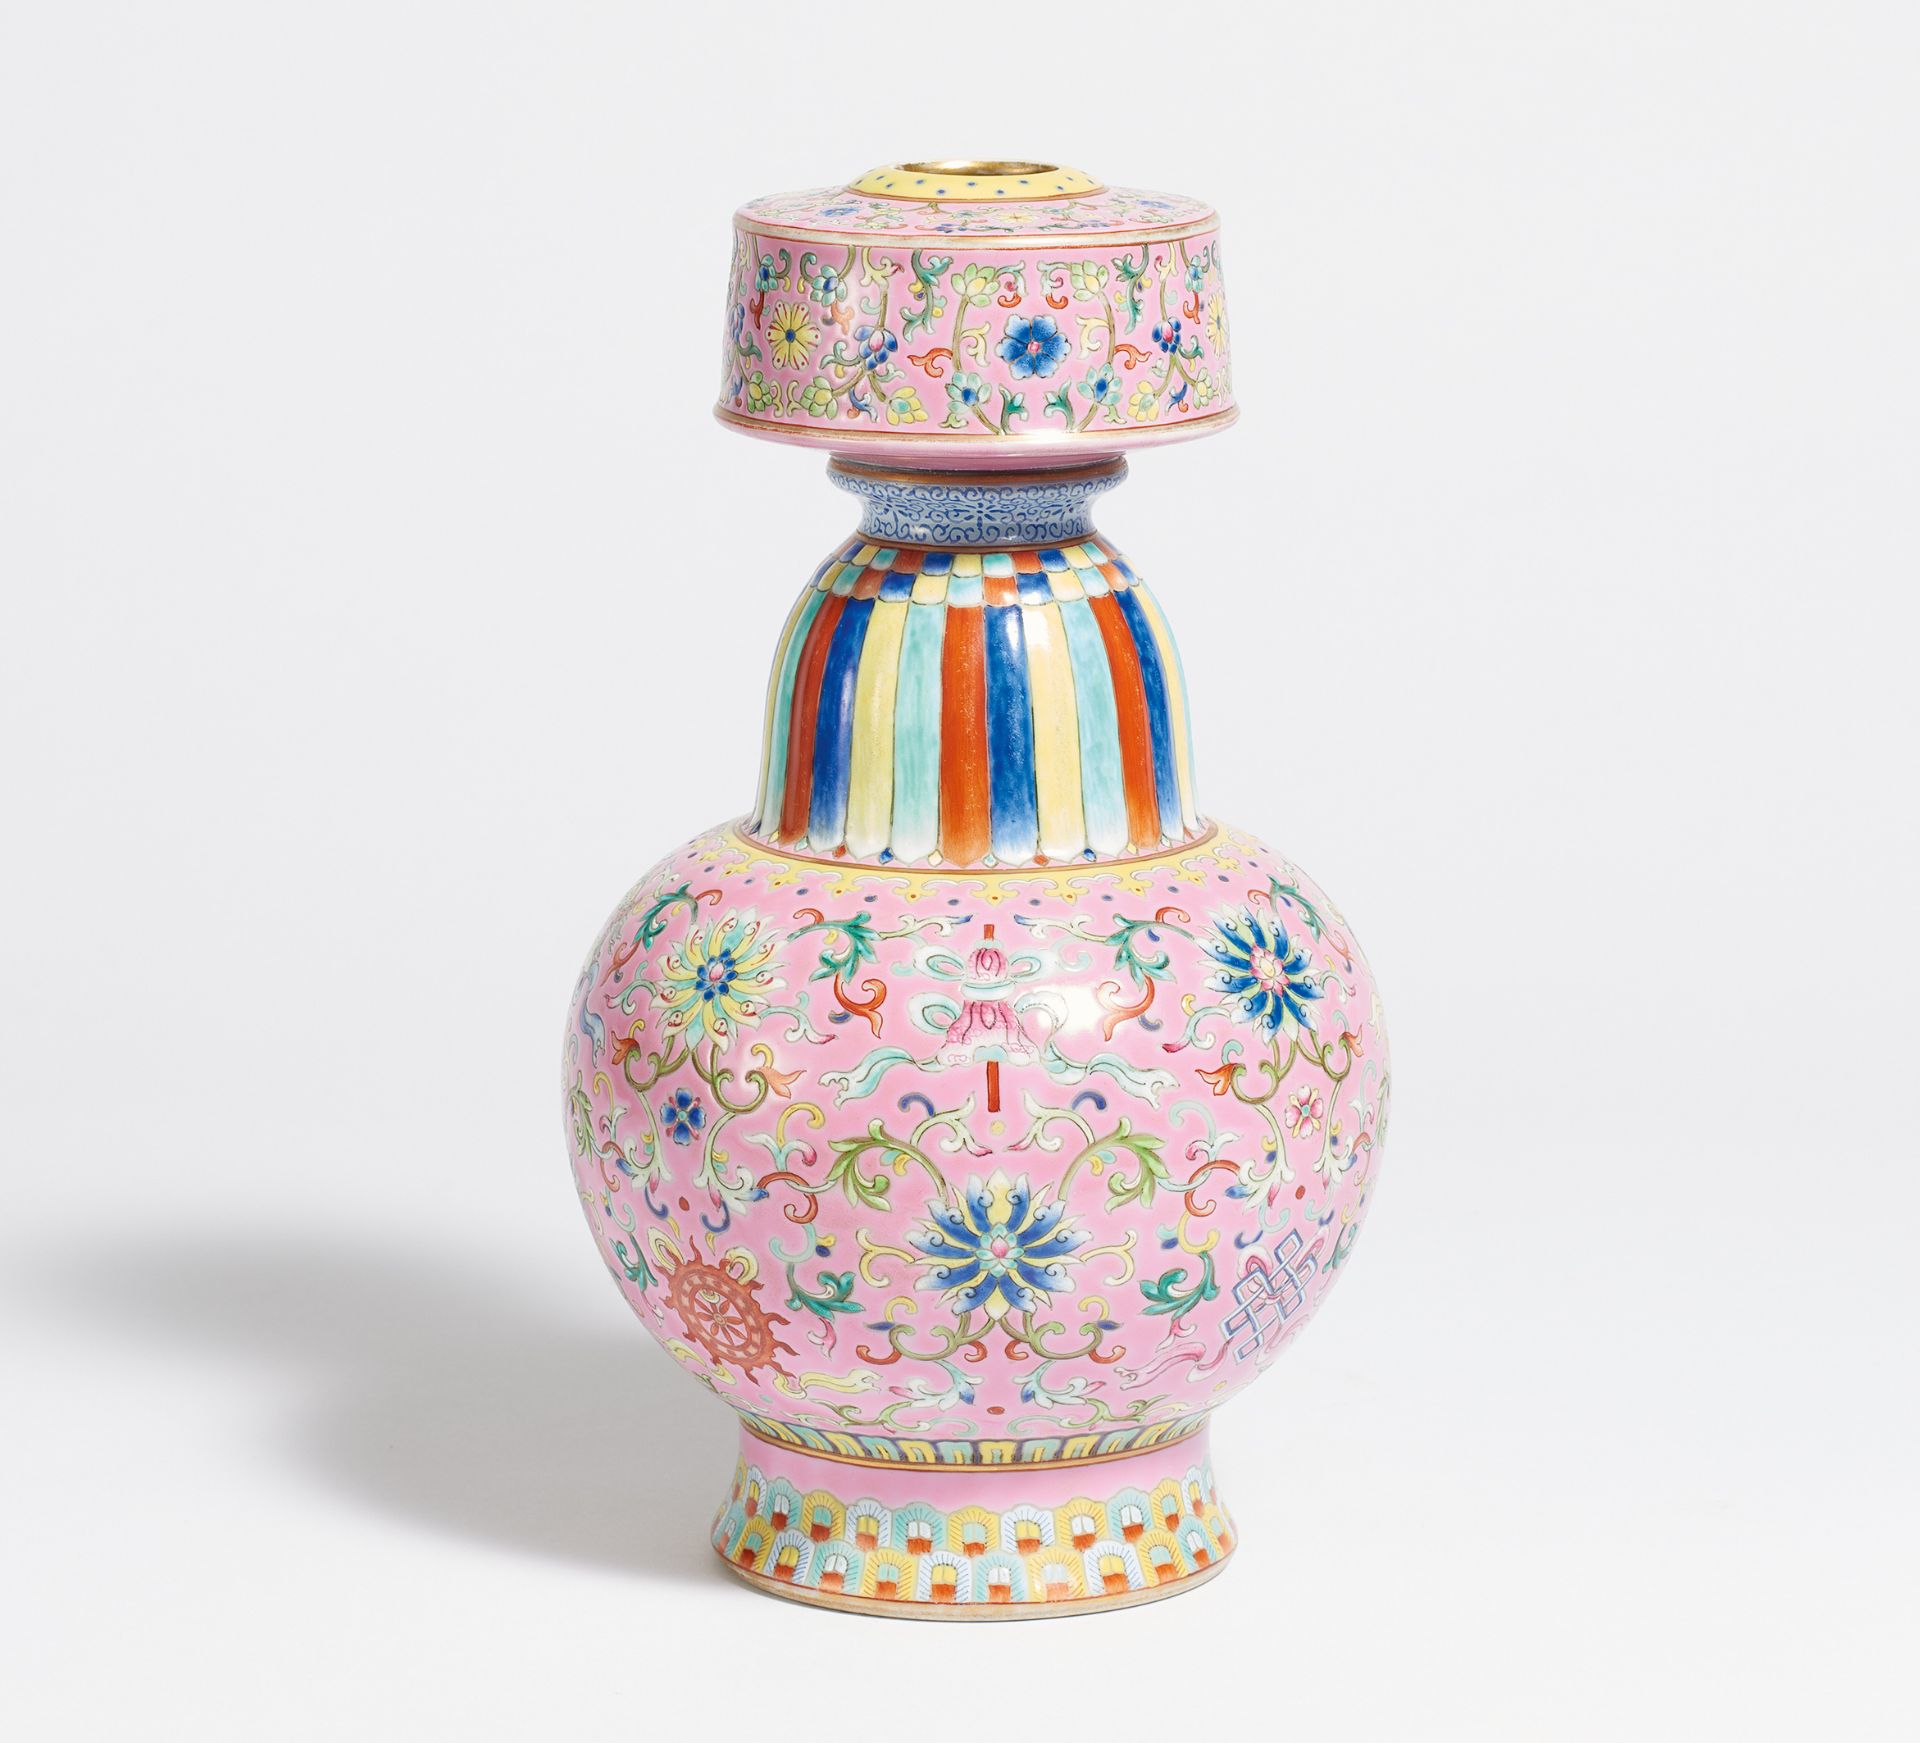 BHUMPA VASE WITH ASHTAMANGALA IN LOTUS SCROLLS. China. Porcelain painted in famille rose on pink